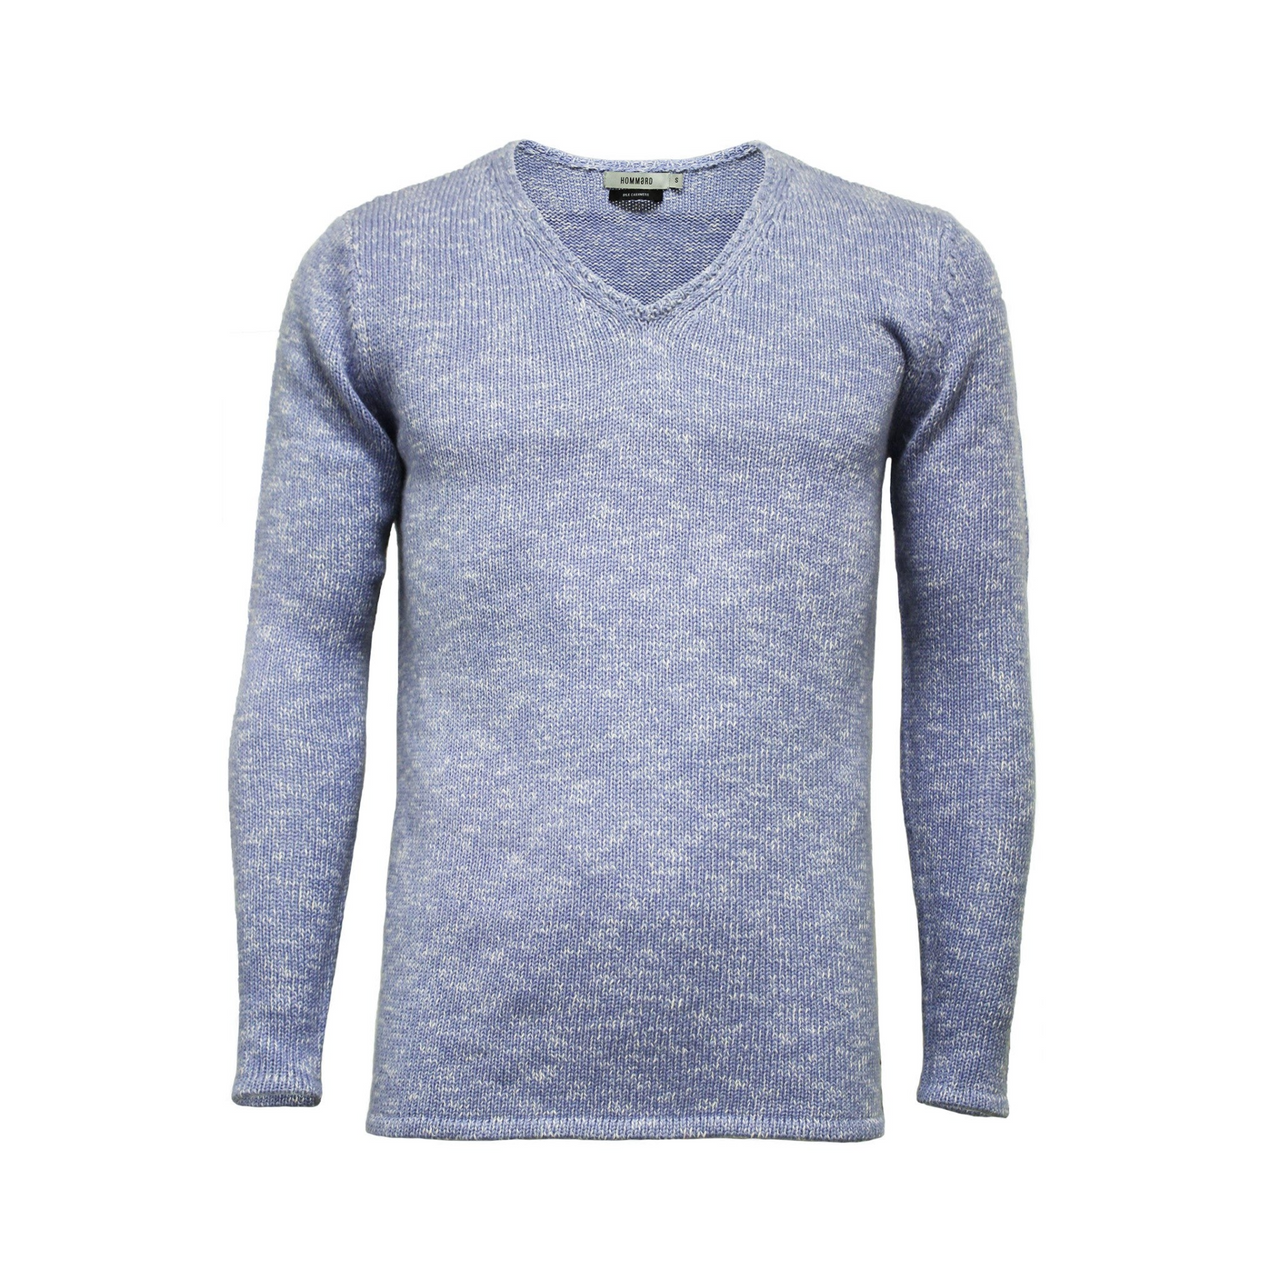 Melange Cashmere V Neck Sweater in Jersey Stitch Blue White